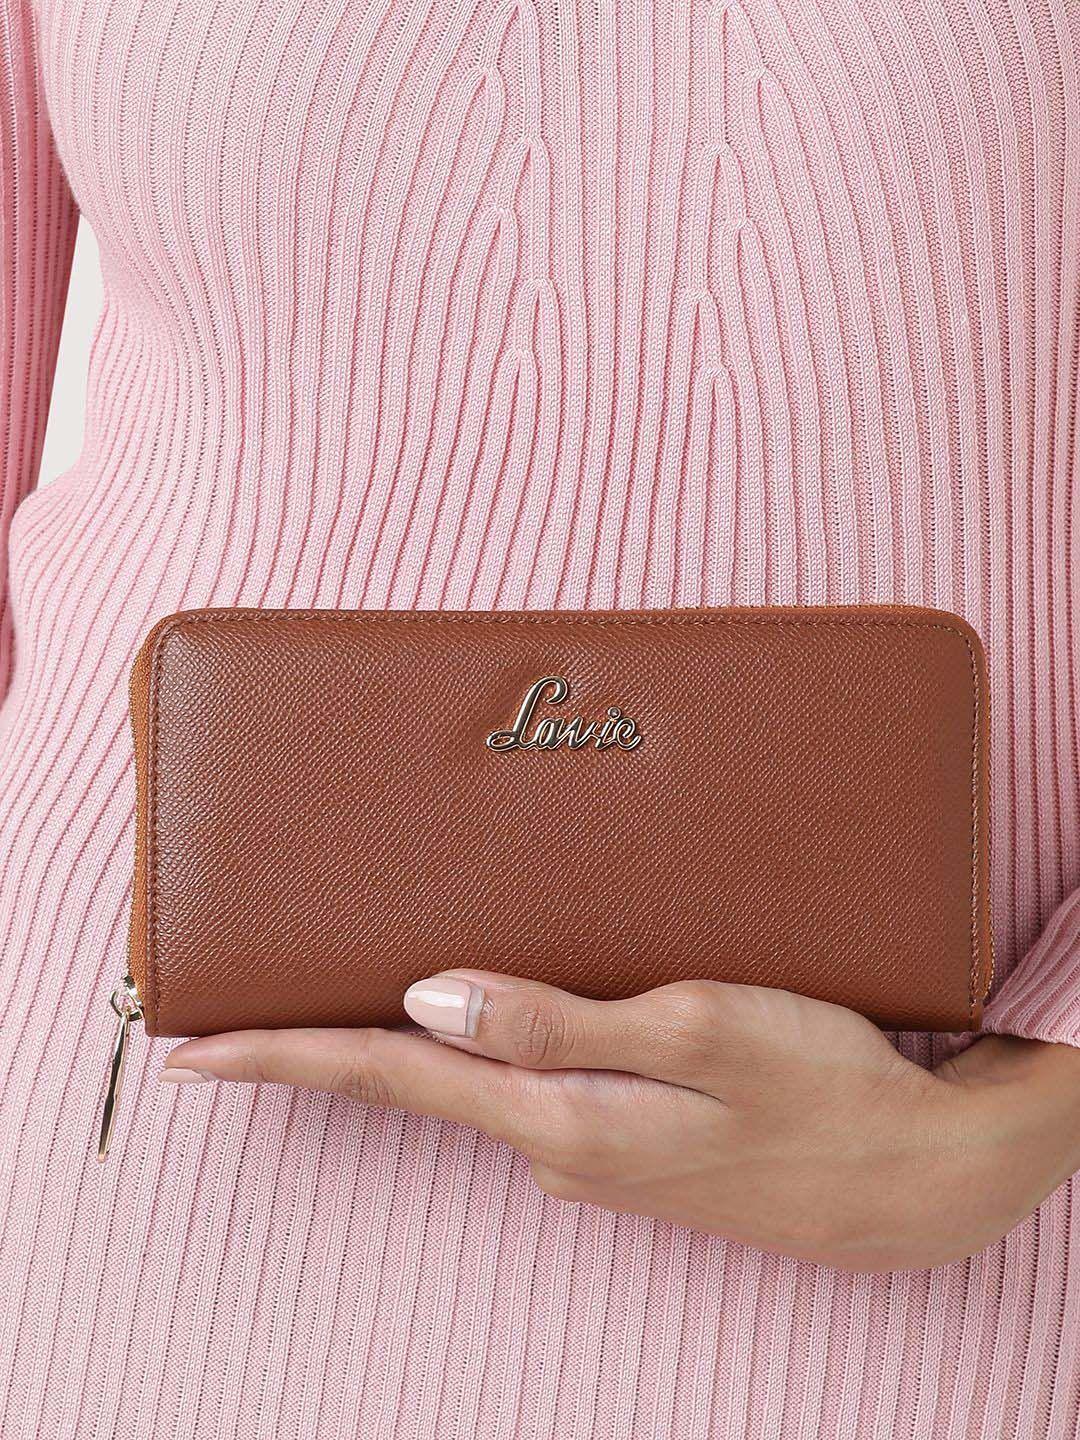 lavie-sacy-pro-women-brown-large-zip-around-purse